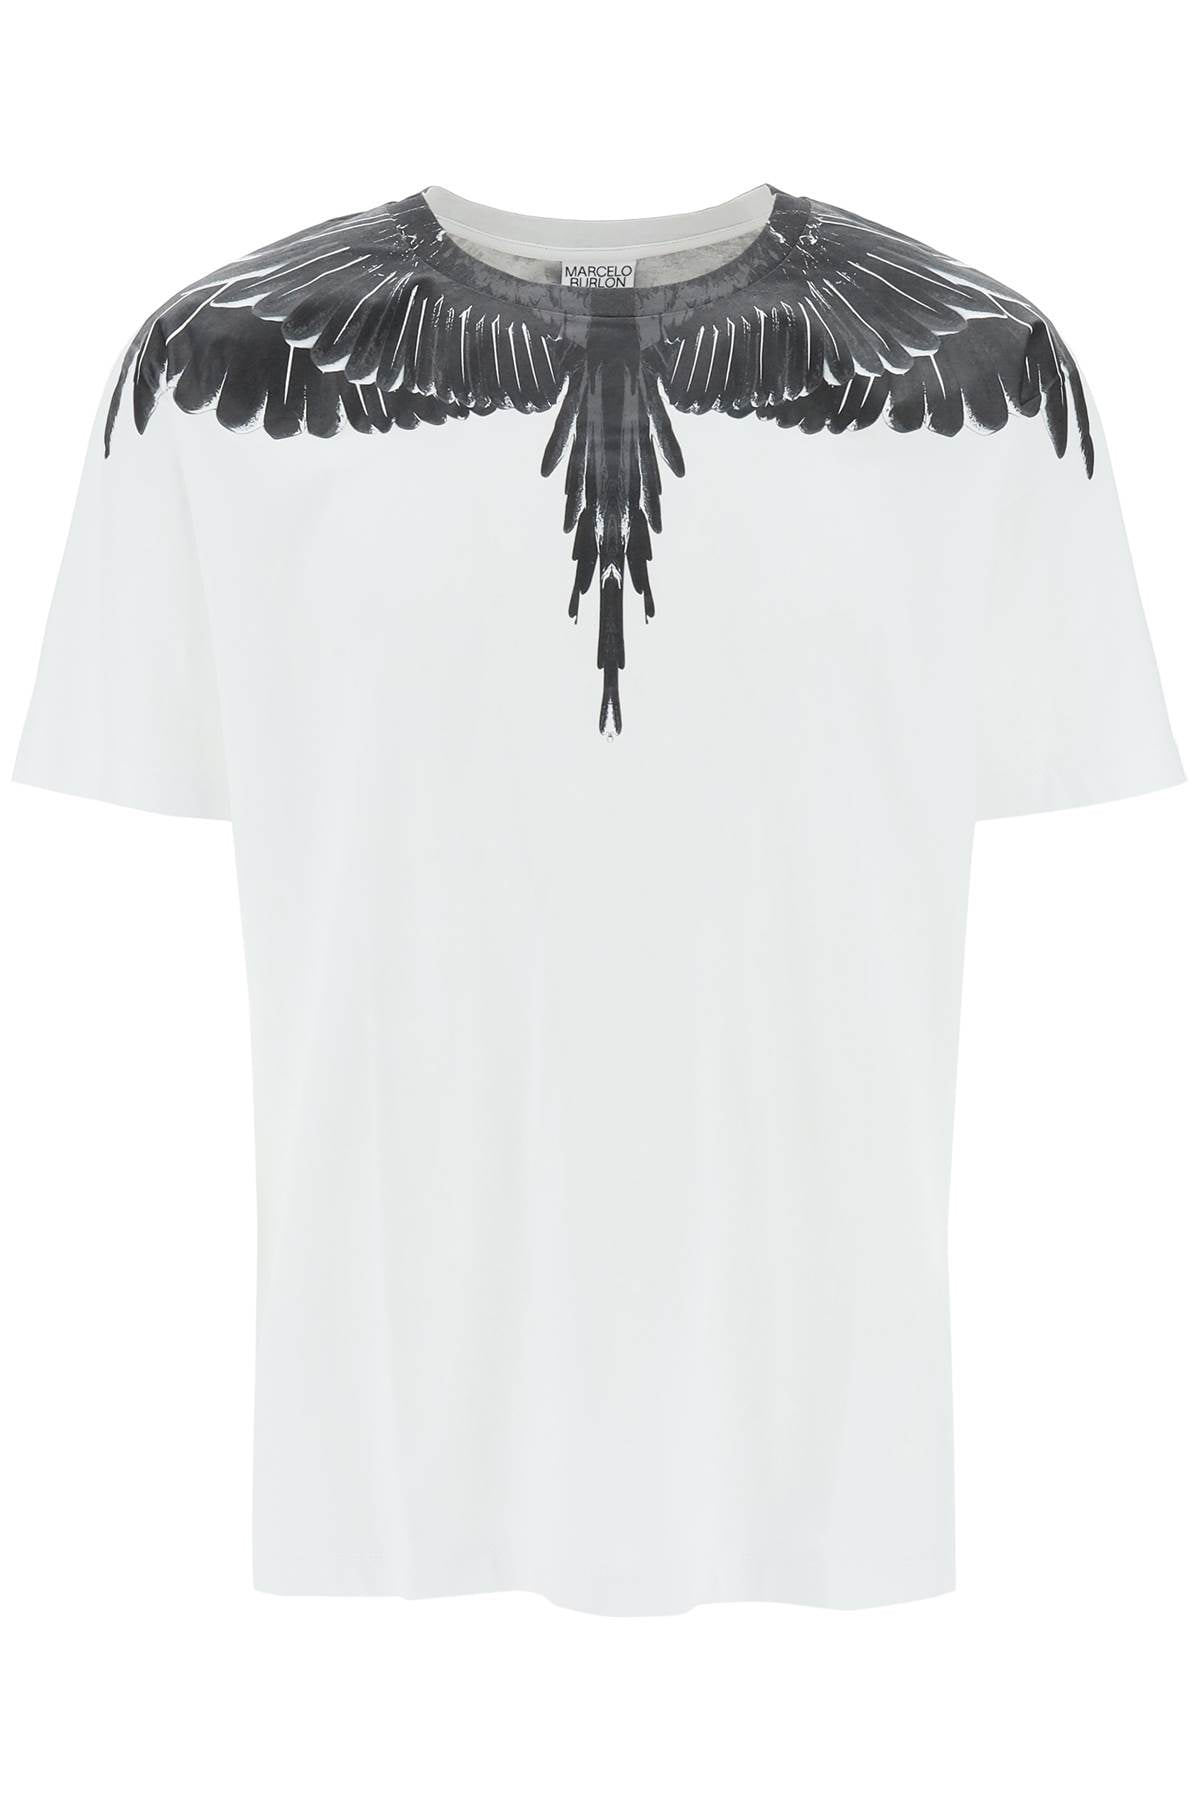 burlon icon wings t-shirt - Walmart.com